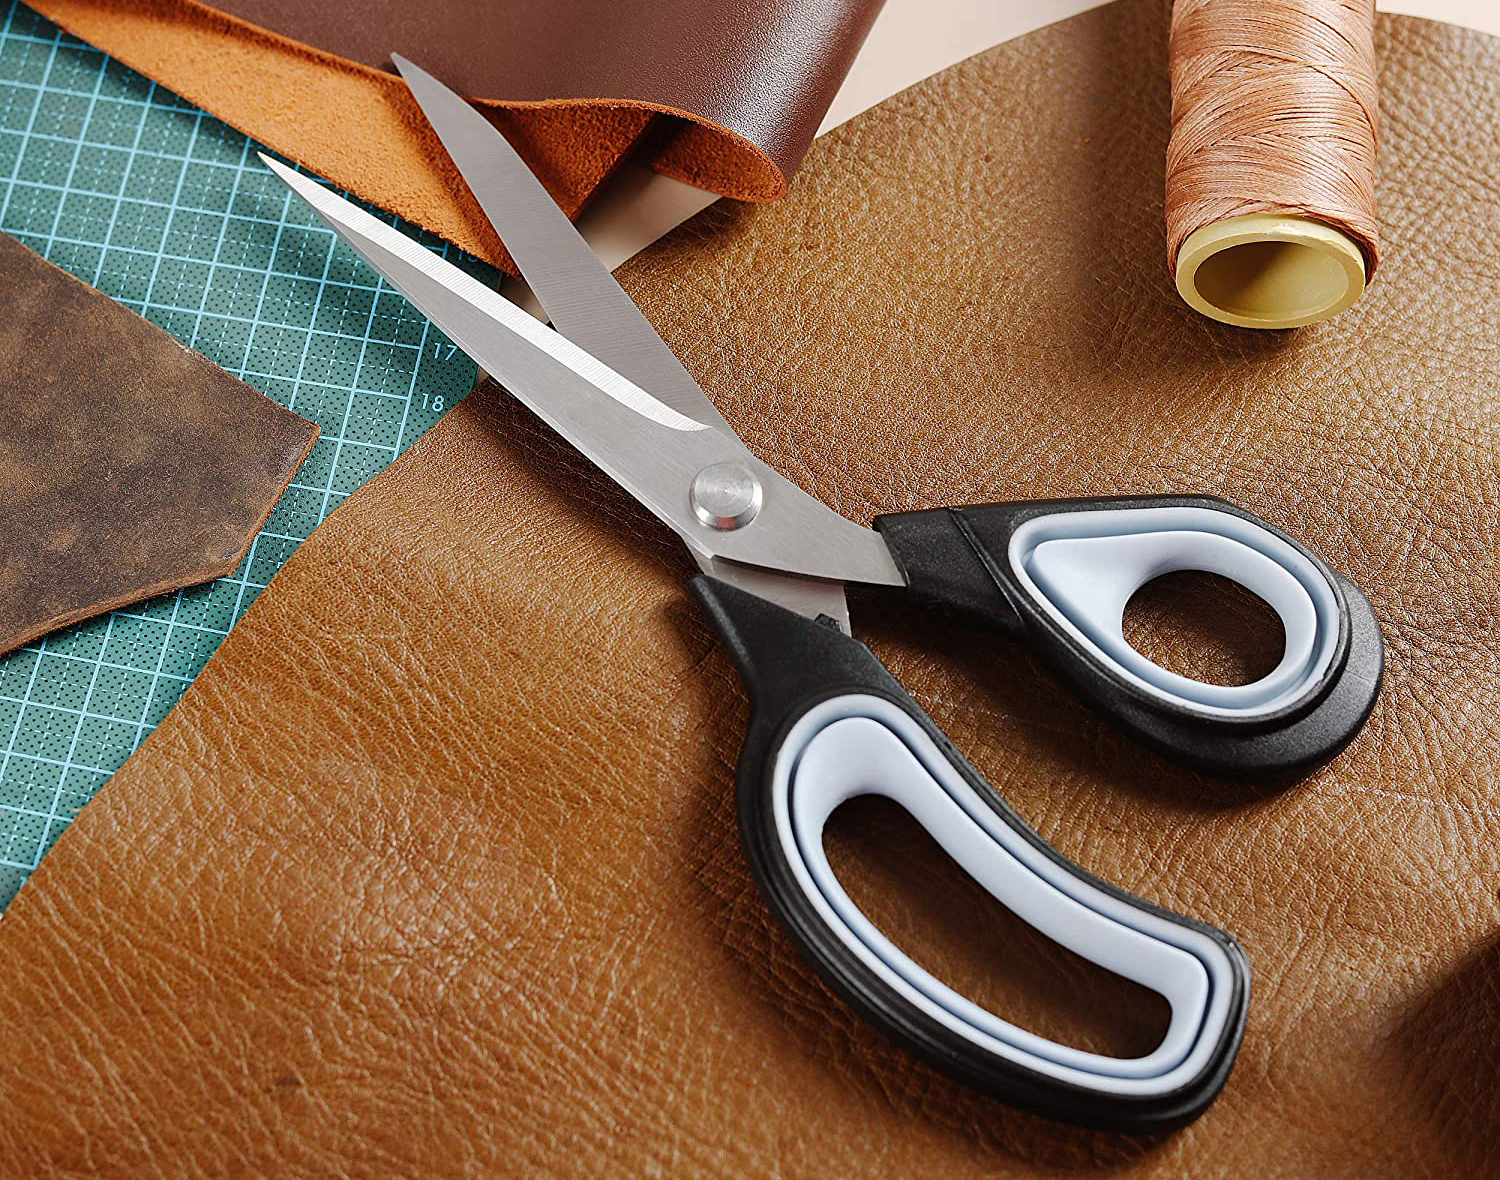 Best Sewing Scissors Options